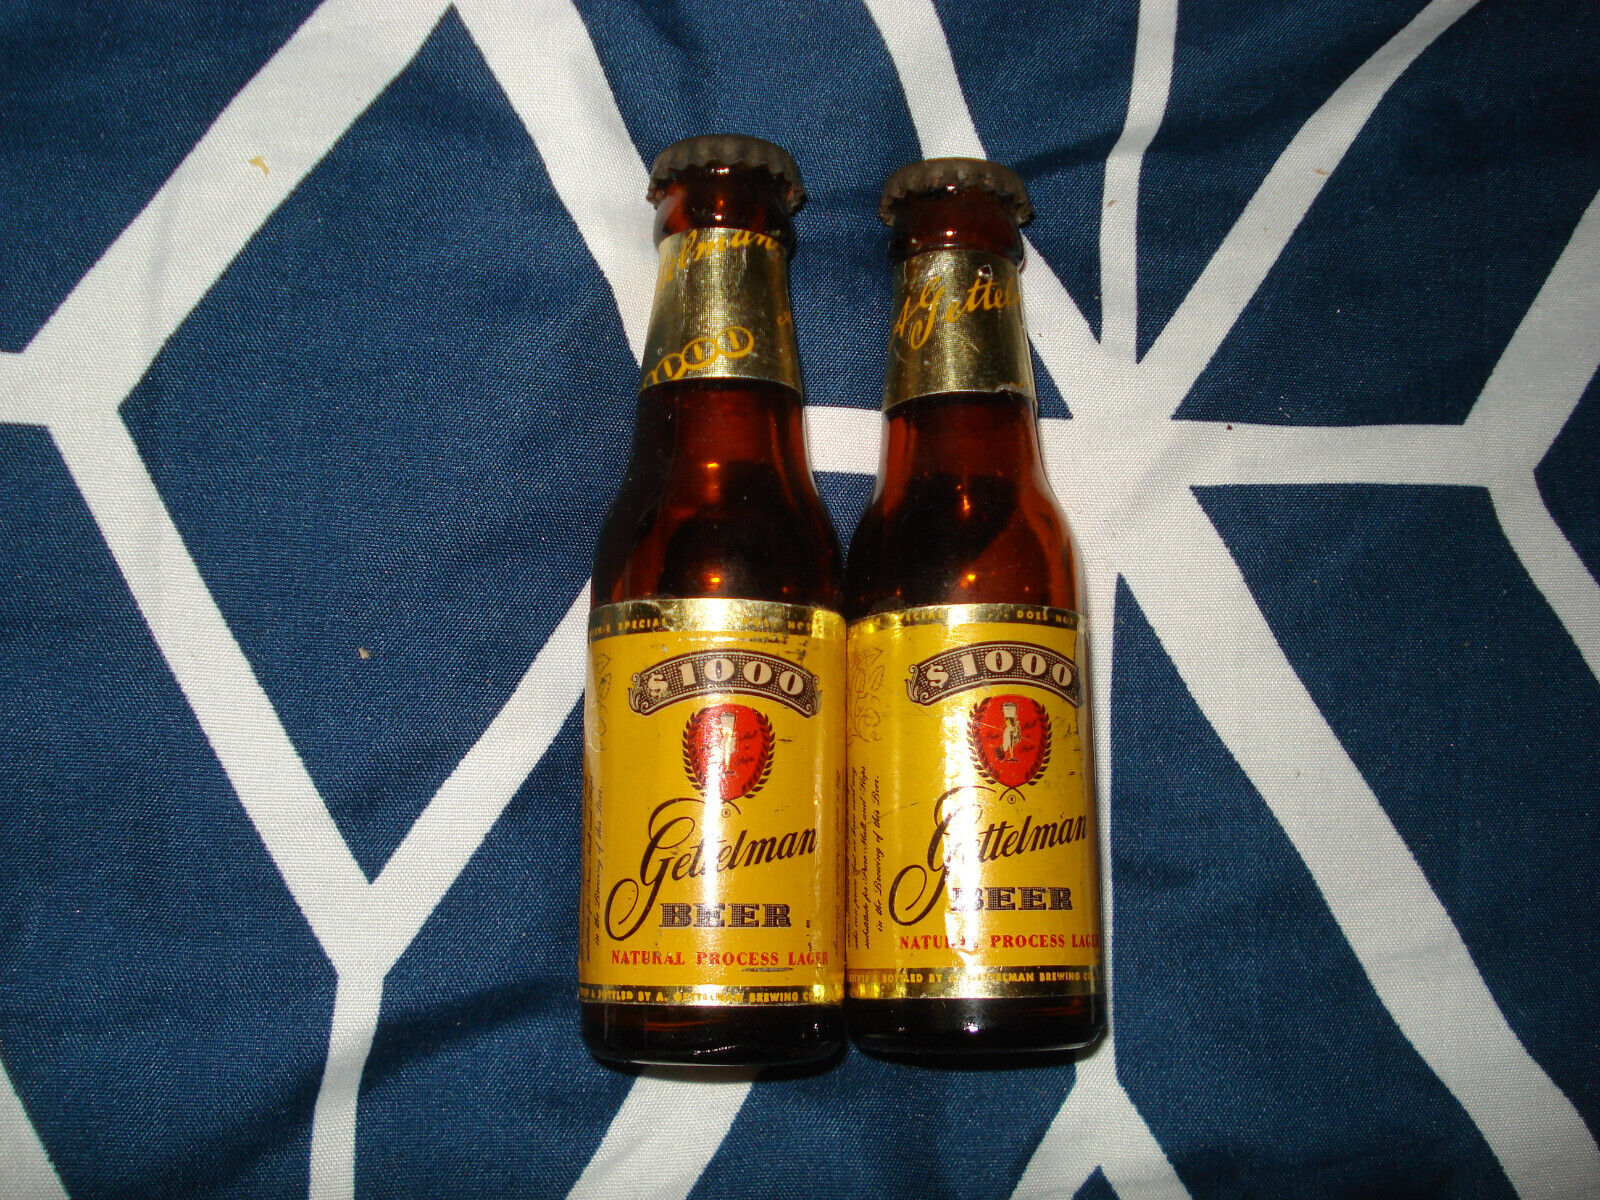 Gettleman Beer Mini Beer Bottles Great Breweriana Pair in Great Condition